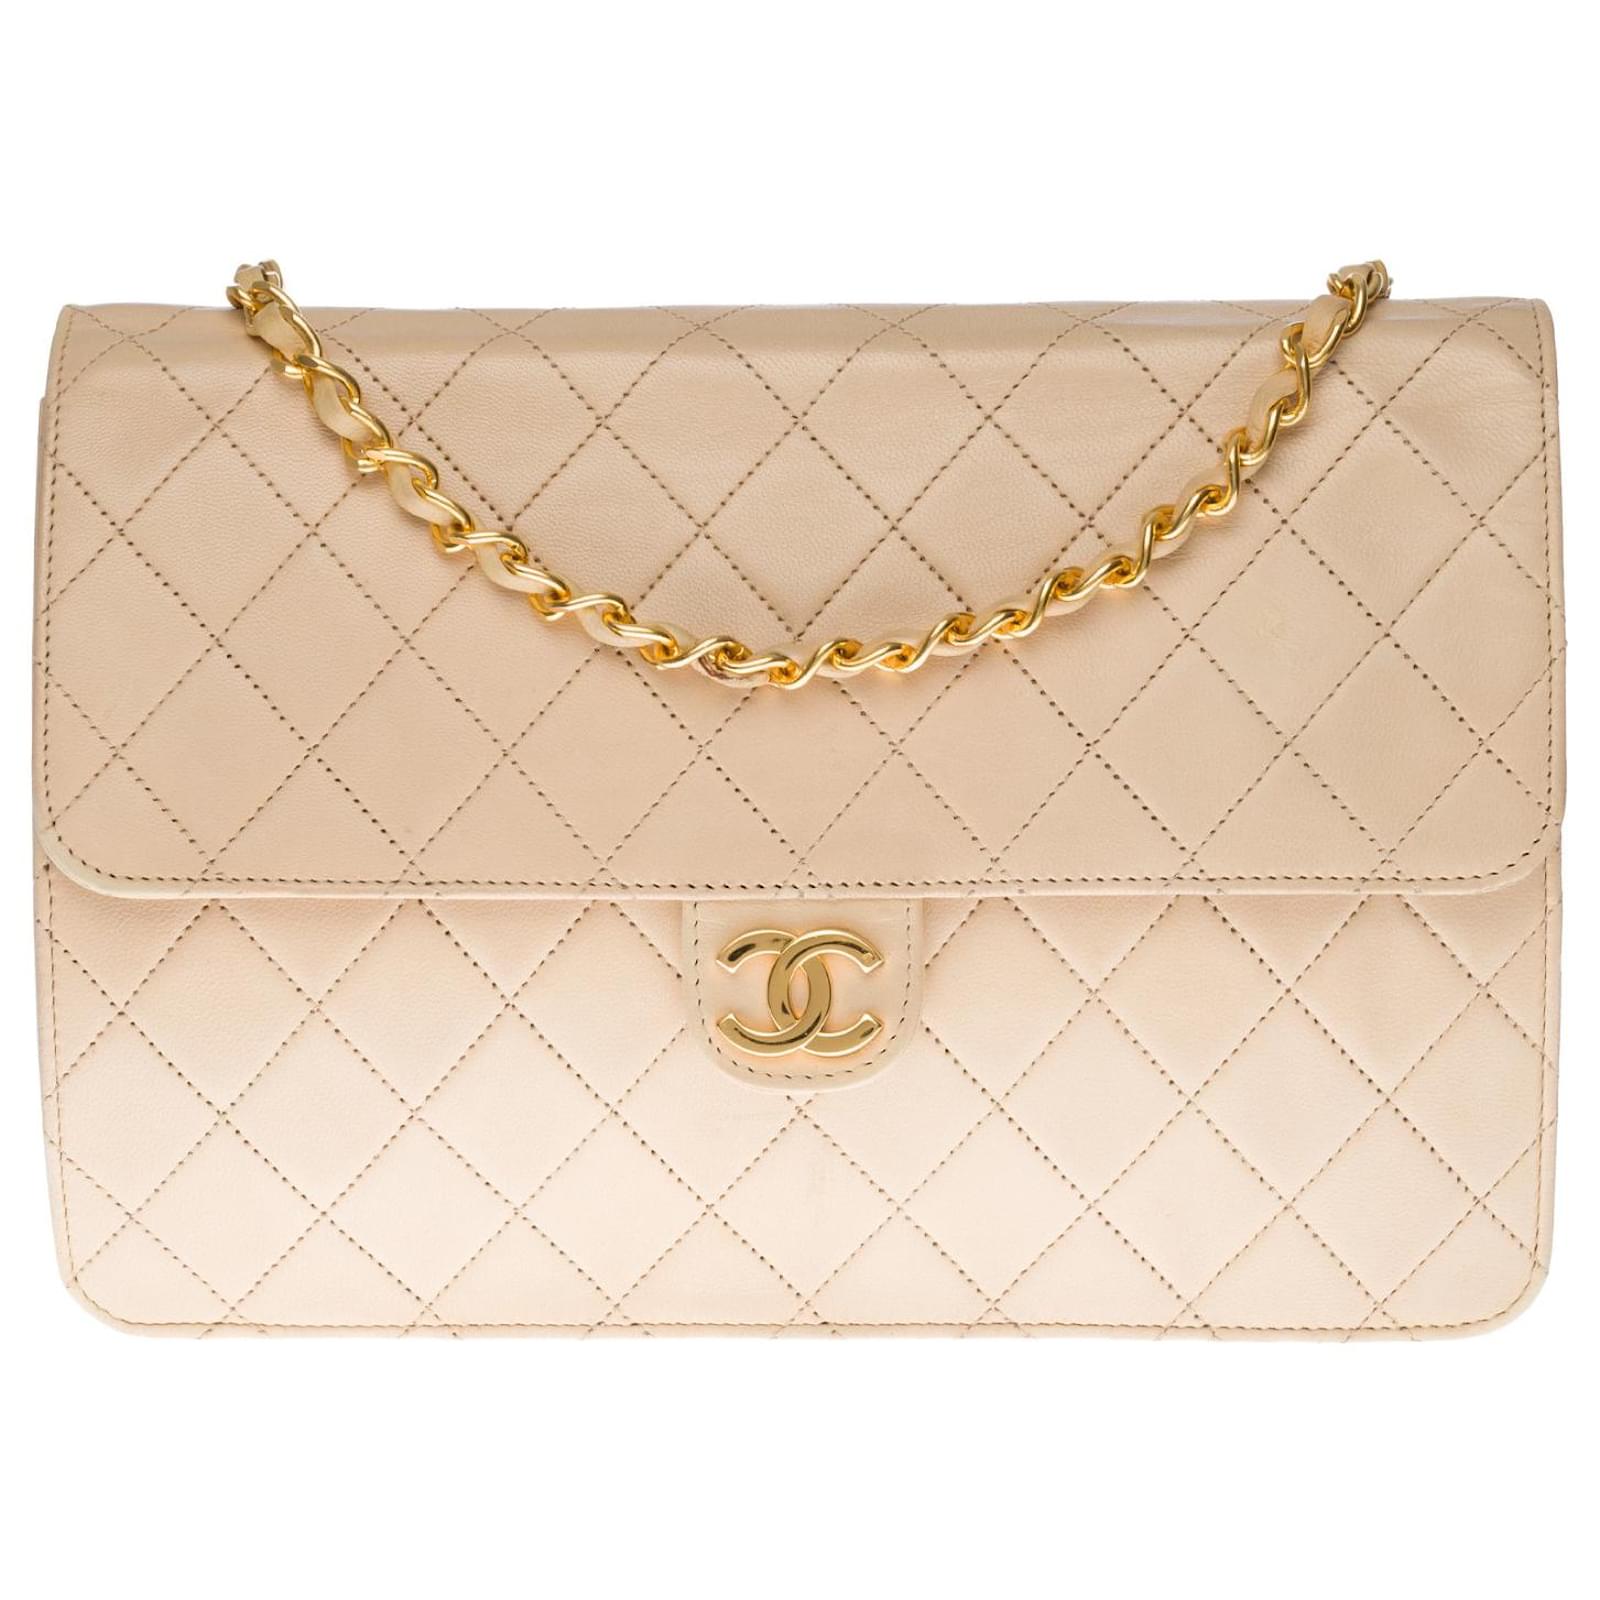 Timeless Very chic Chanel Classique shoulder bag 25 cm beige